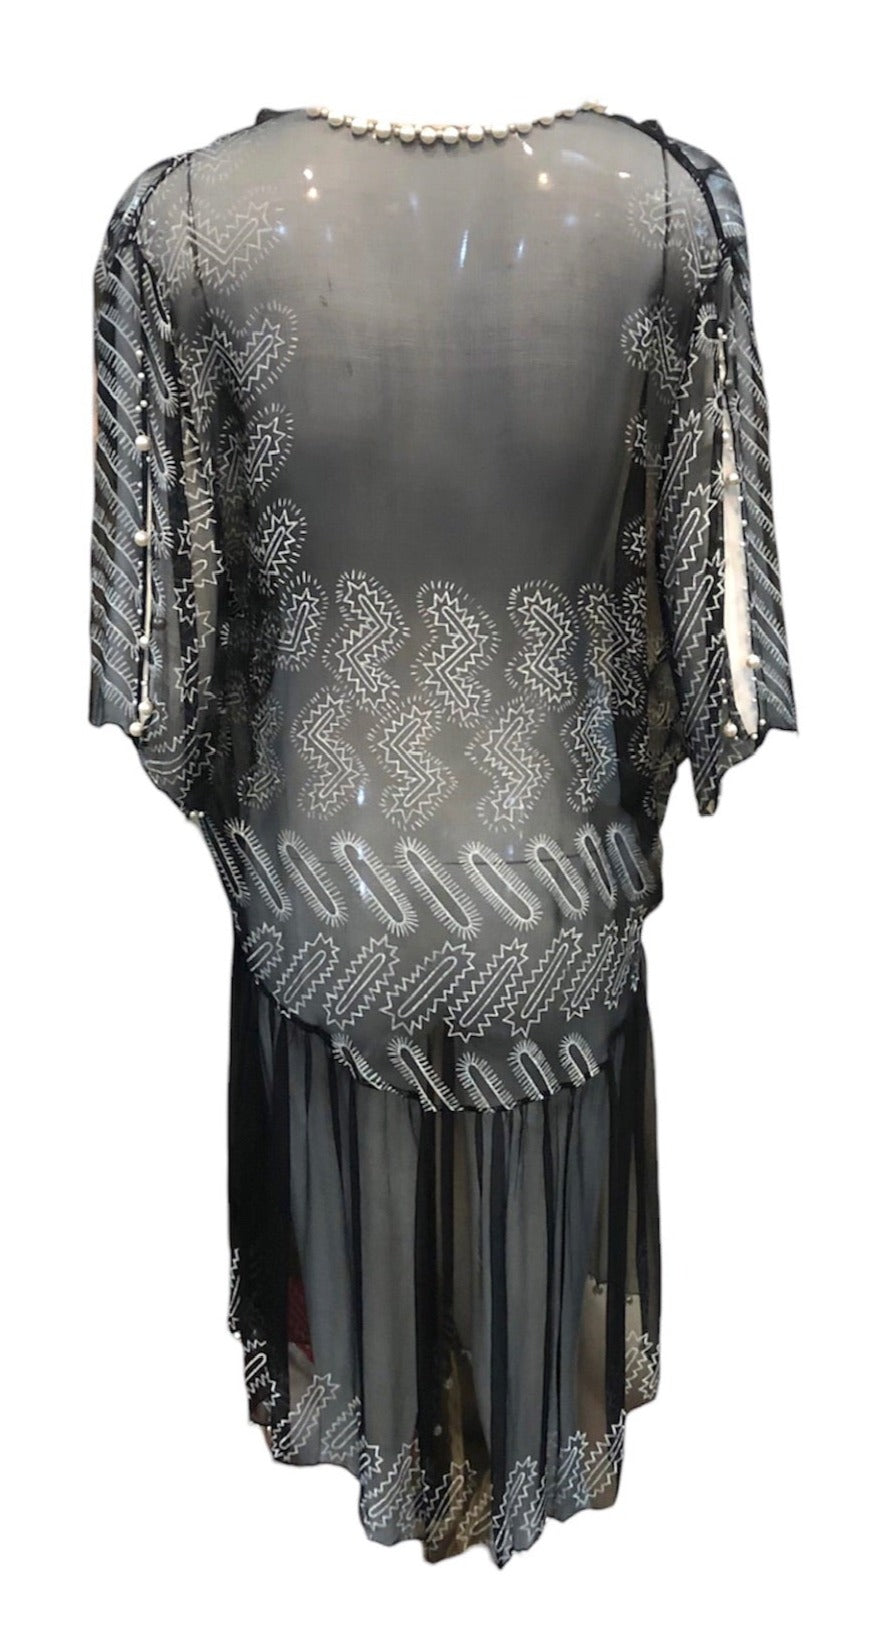   Zandra Rhodes 80s Black Chiffon Dress Trimmed with Pearls and RhinestonesBACK 3 of 7